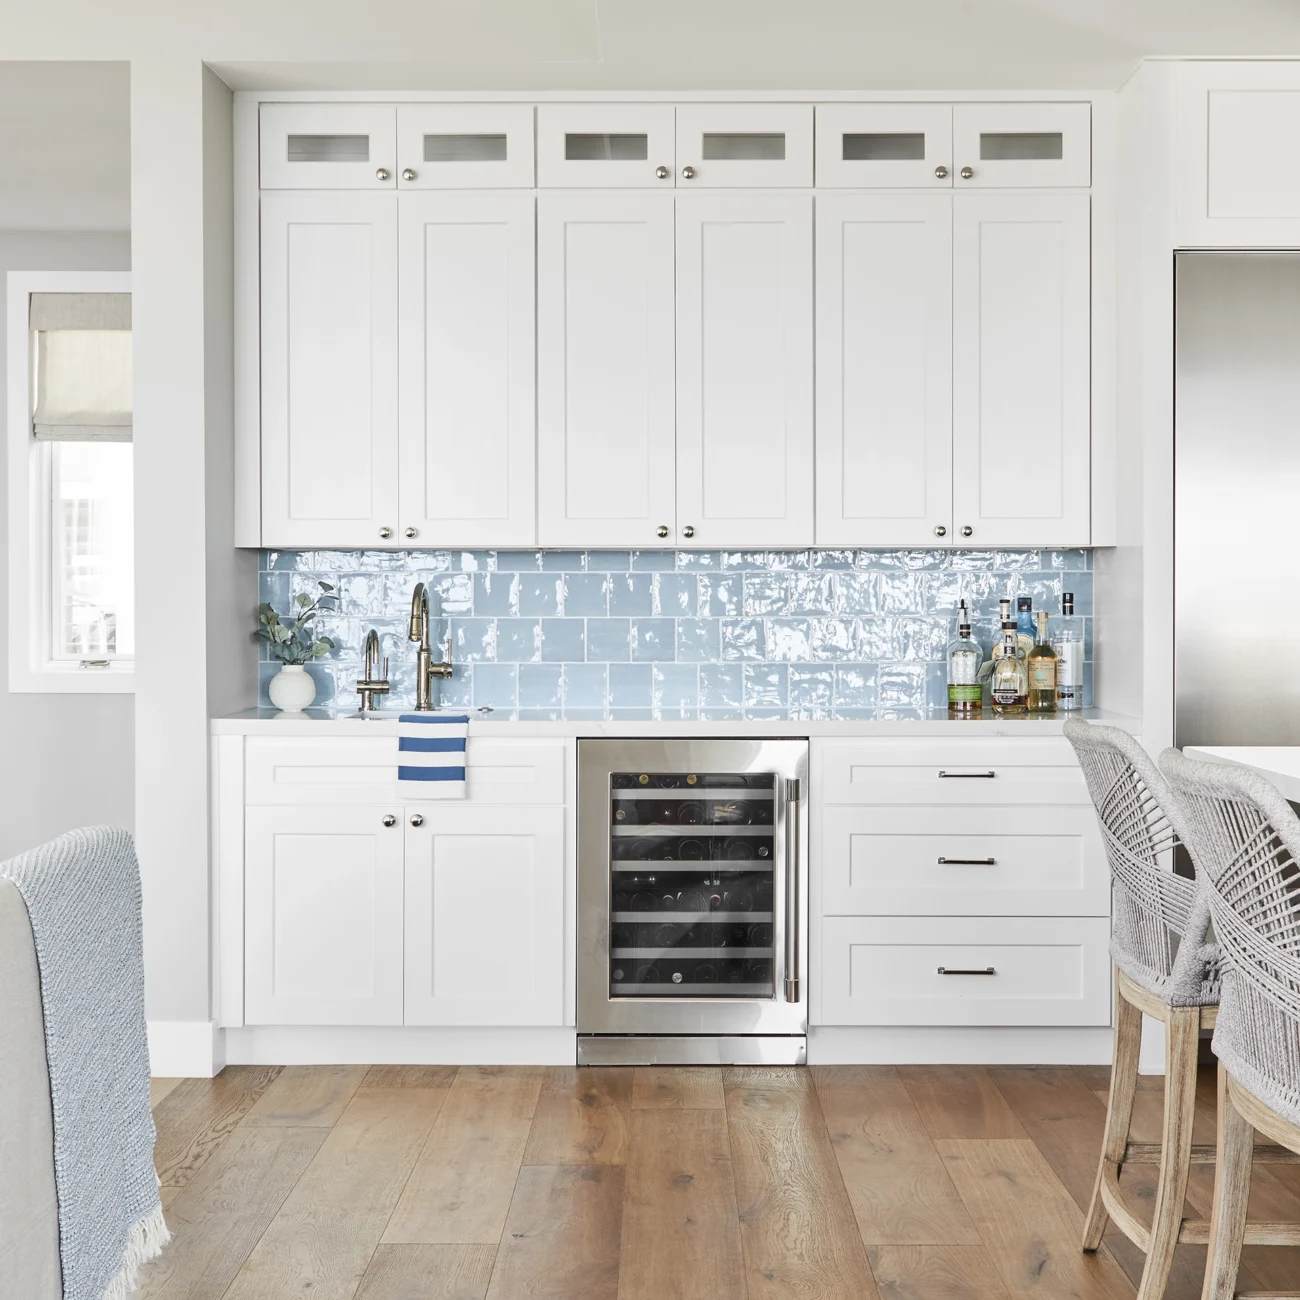 Christine Vroom Interiors | 27th | bright, costal kitchen with light blue backsplash